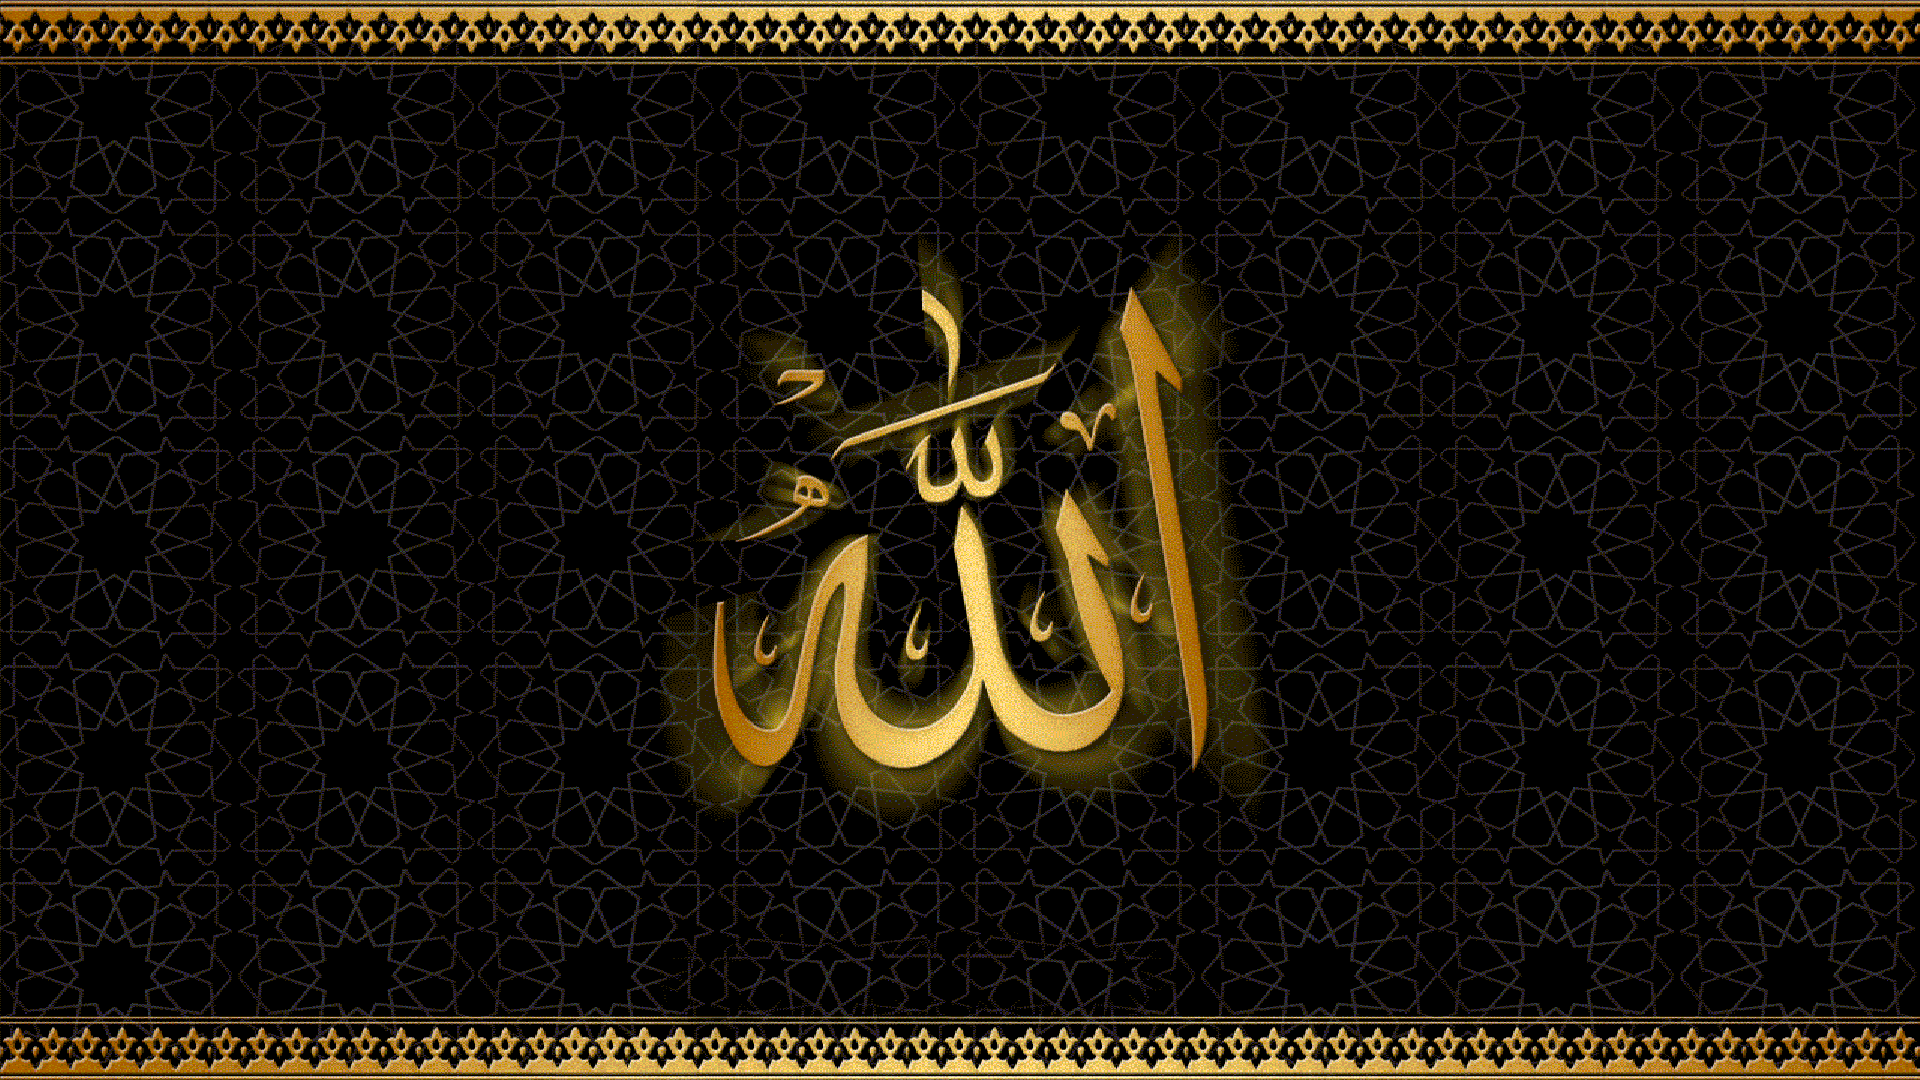 Islamic Name of Allah. Science